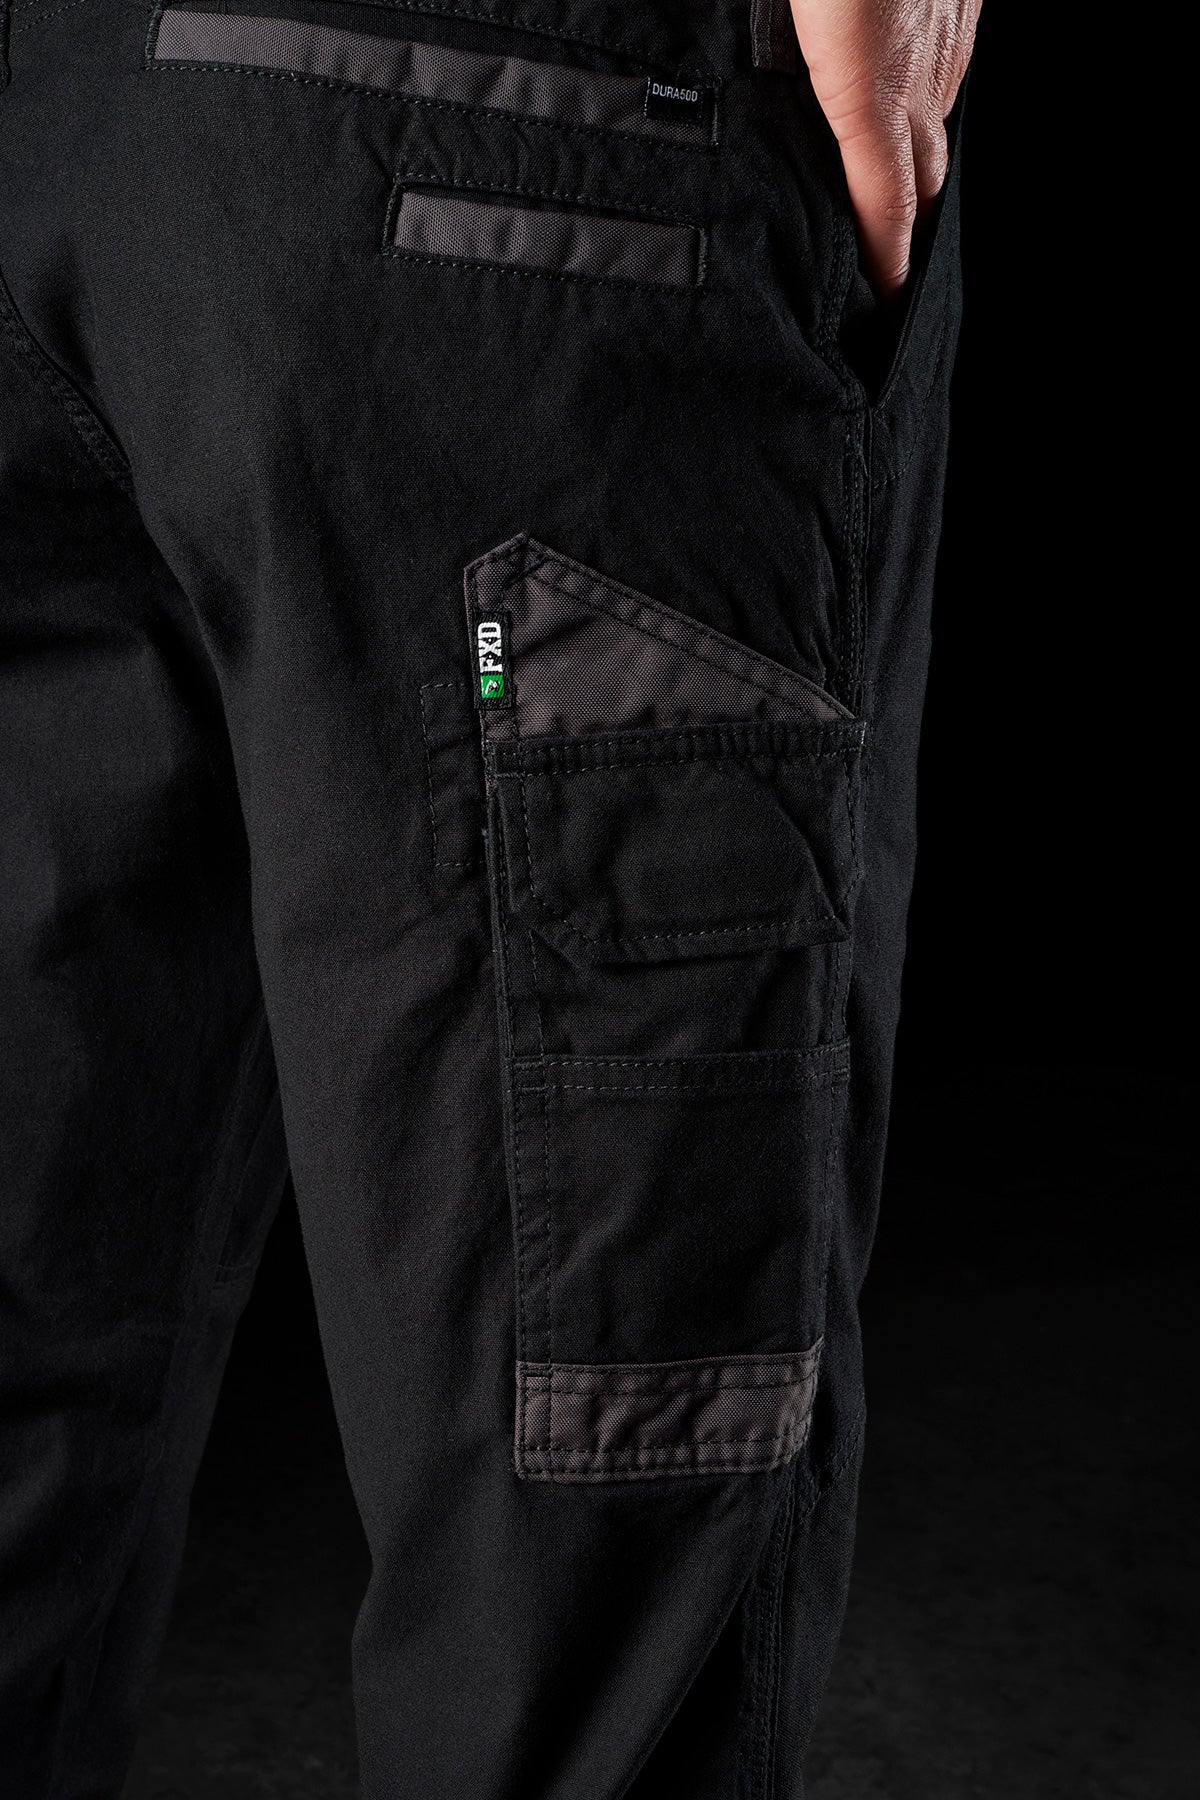 FXD WP-3 Stretch Work Pants Black, Khaki or Navy - Safety1st